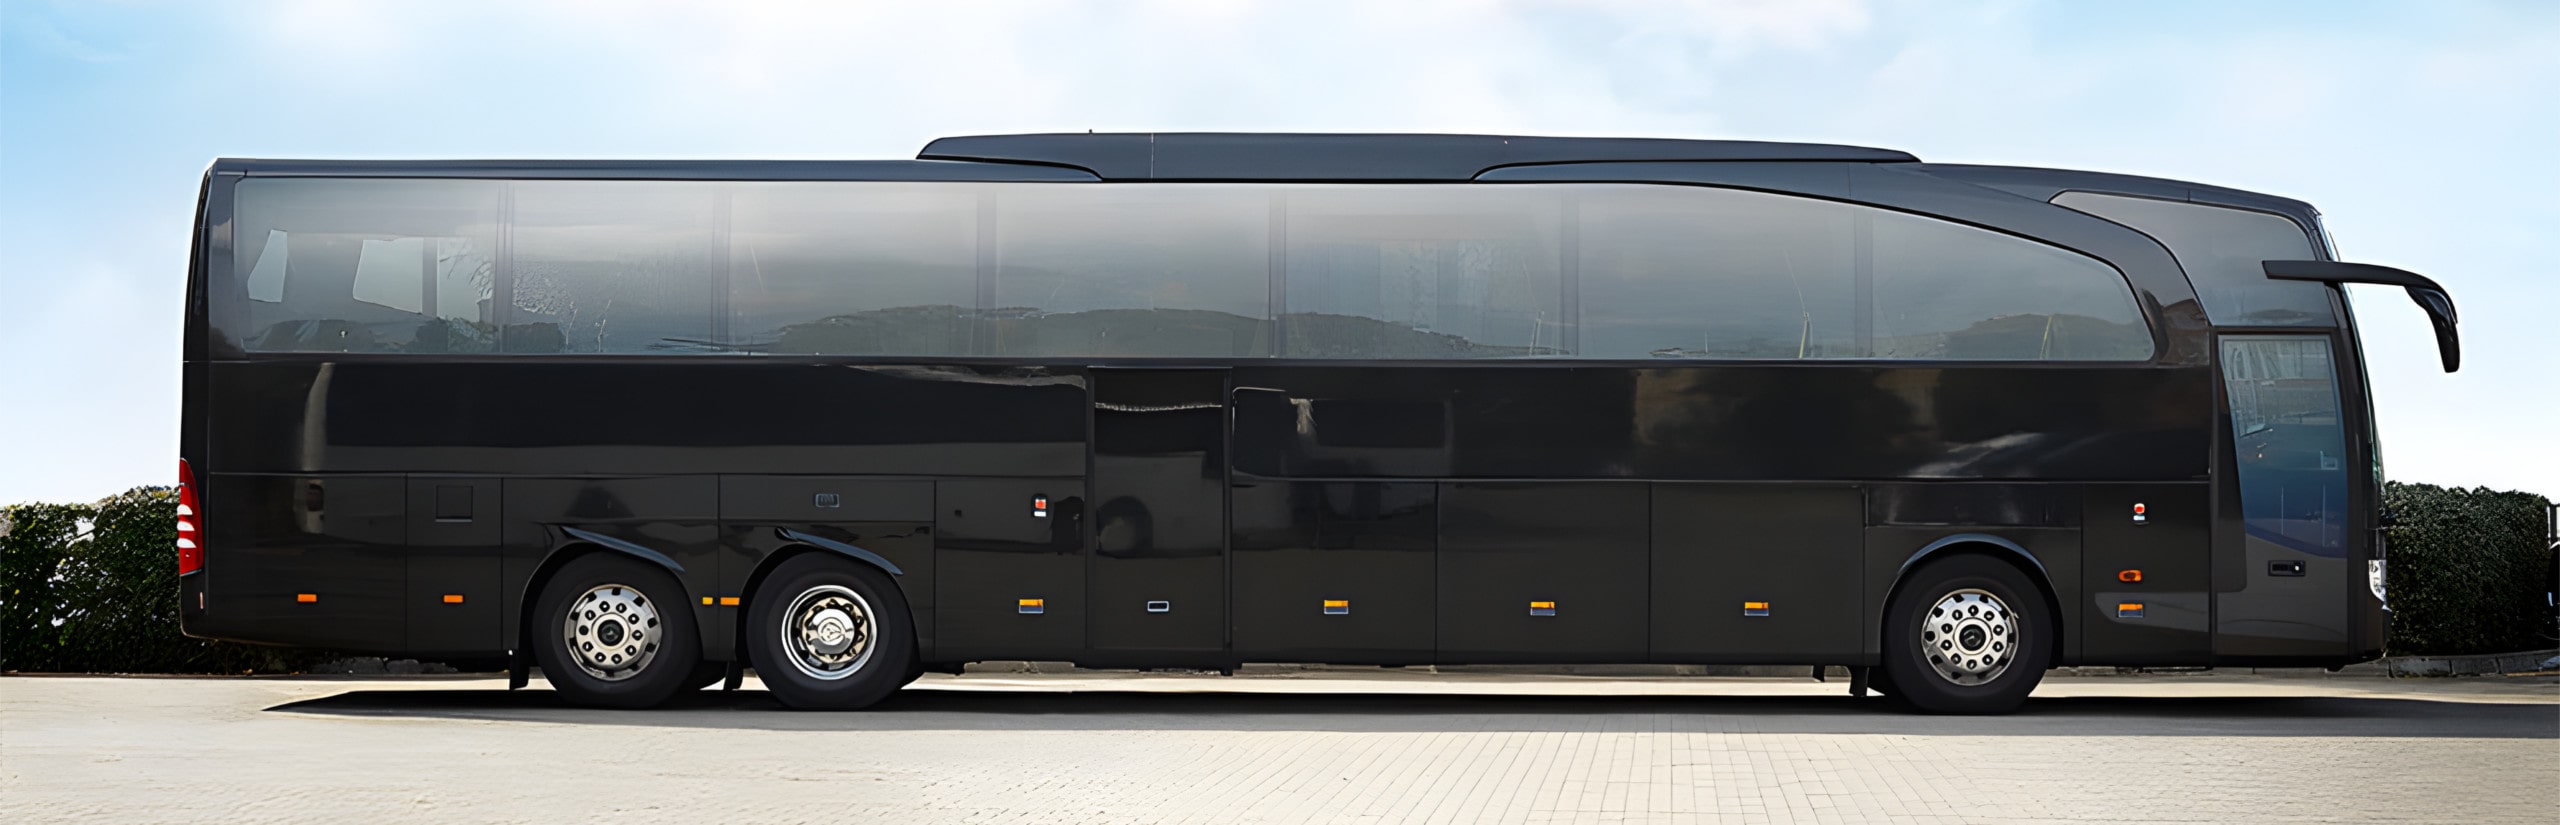 VIP Bus – Luxury Bus – VIP Liner – Conference Bus Hire in Berlin & Potsdam